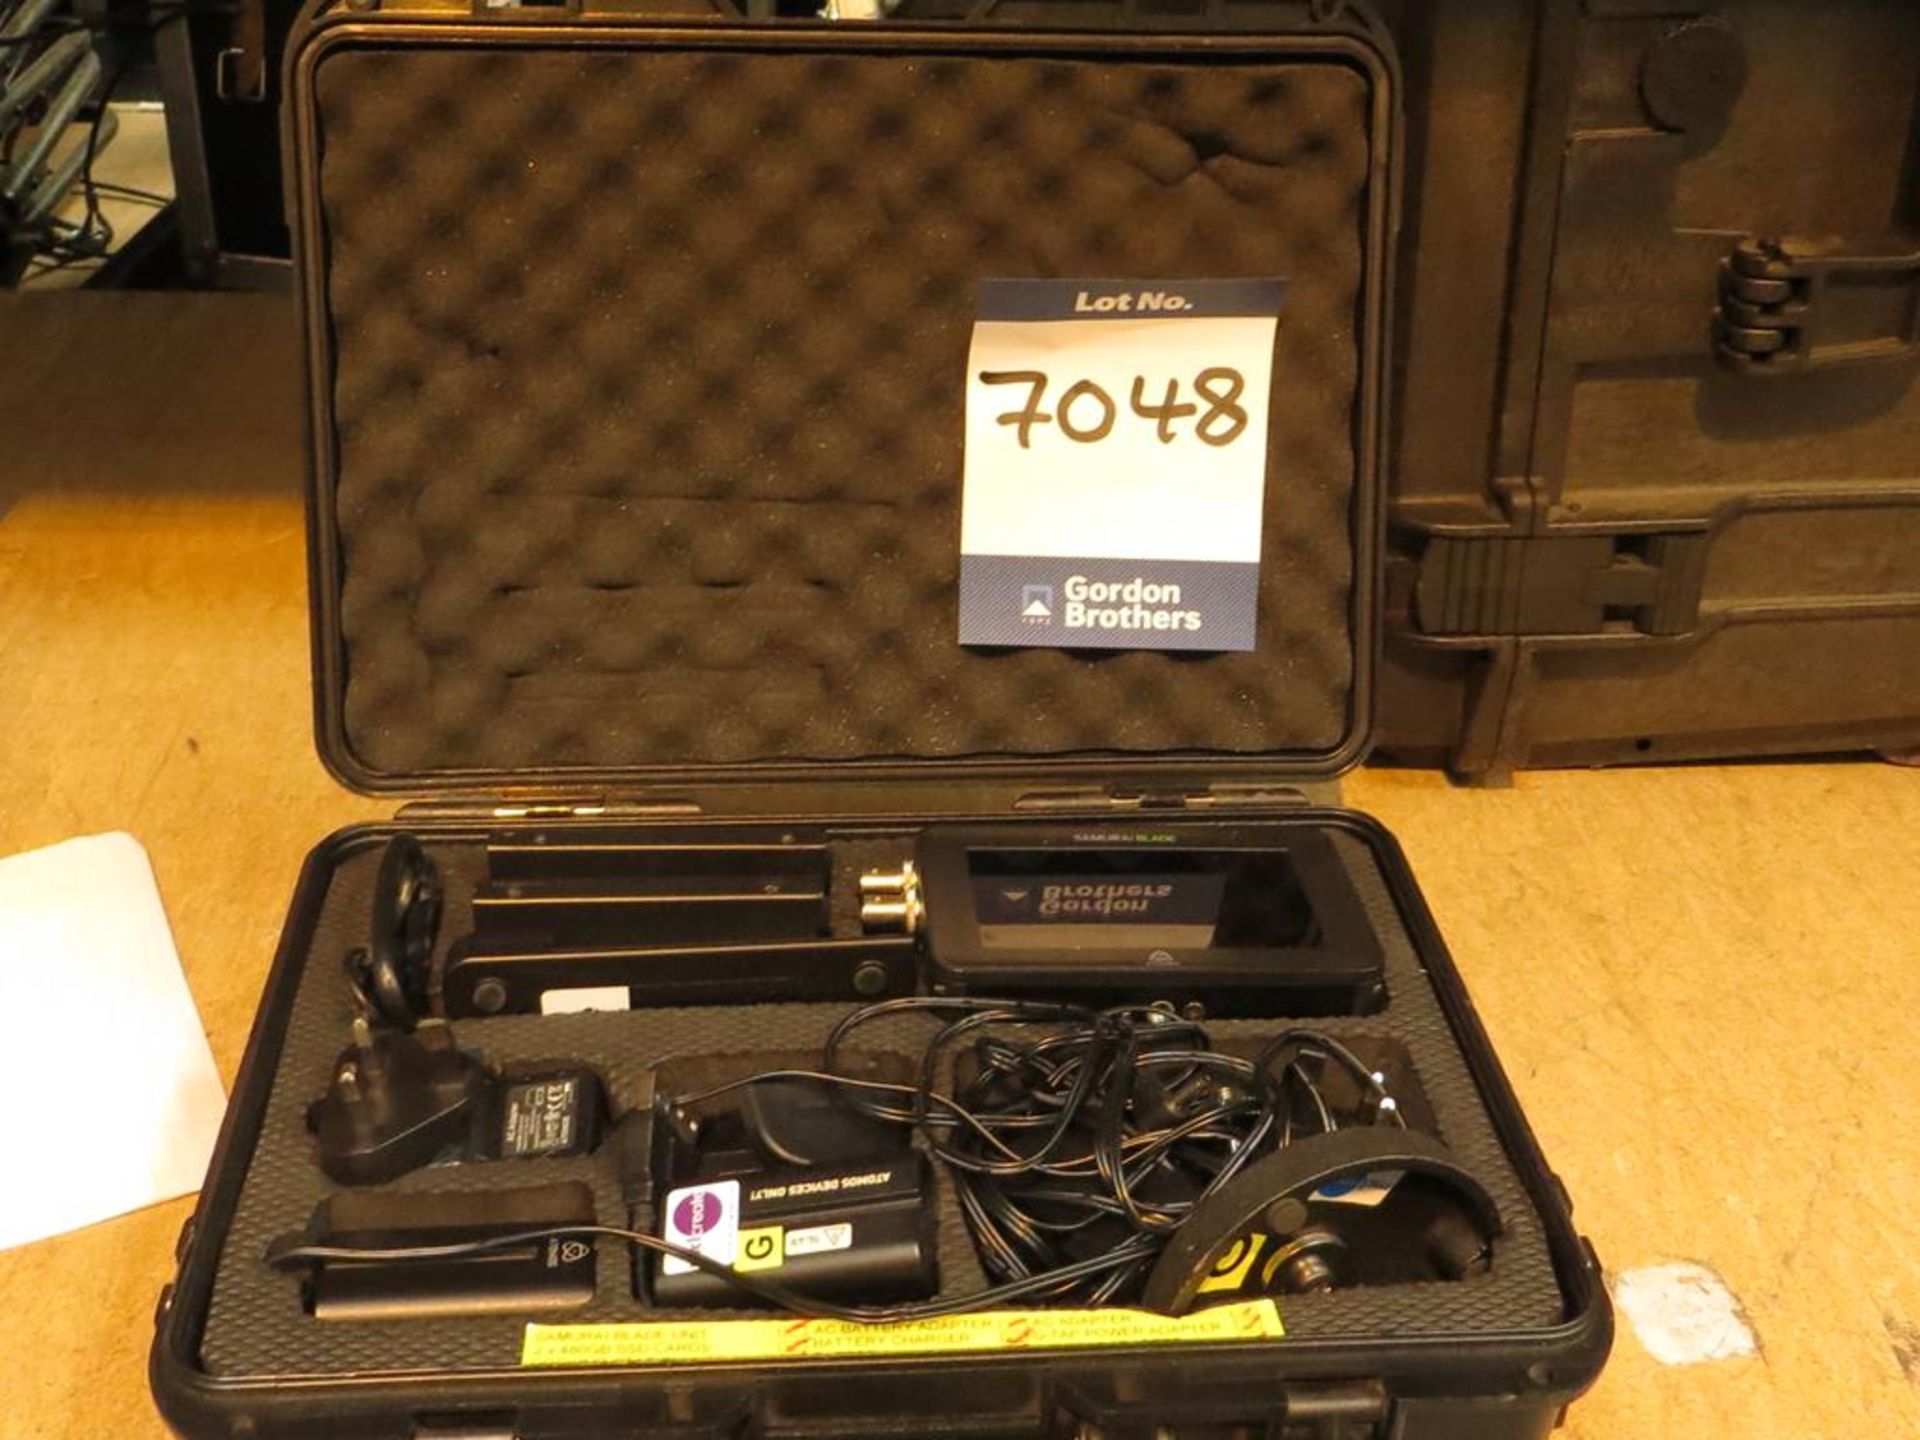 Atamos, Samurai Blade SSD recorder, Serial No. 85RW64SMB51E38 in transit case: Unit C Moorside, 40